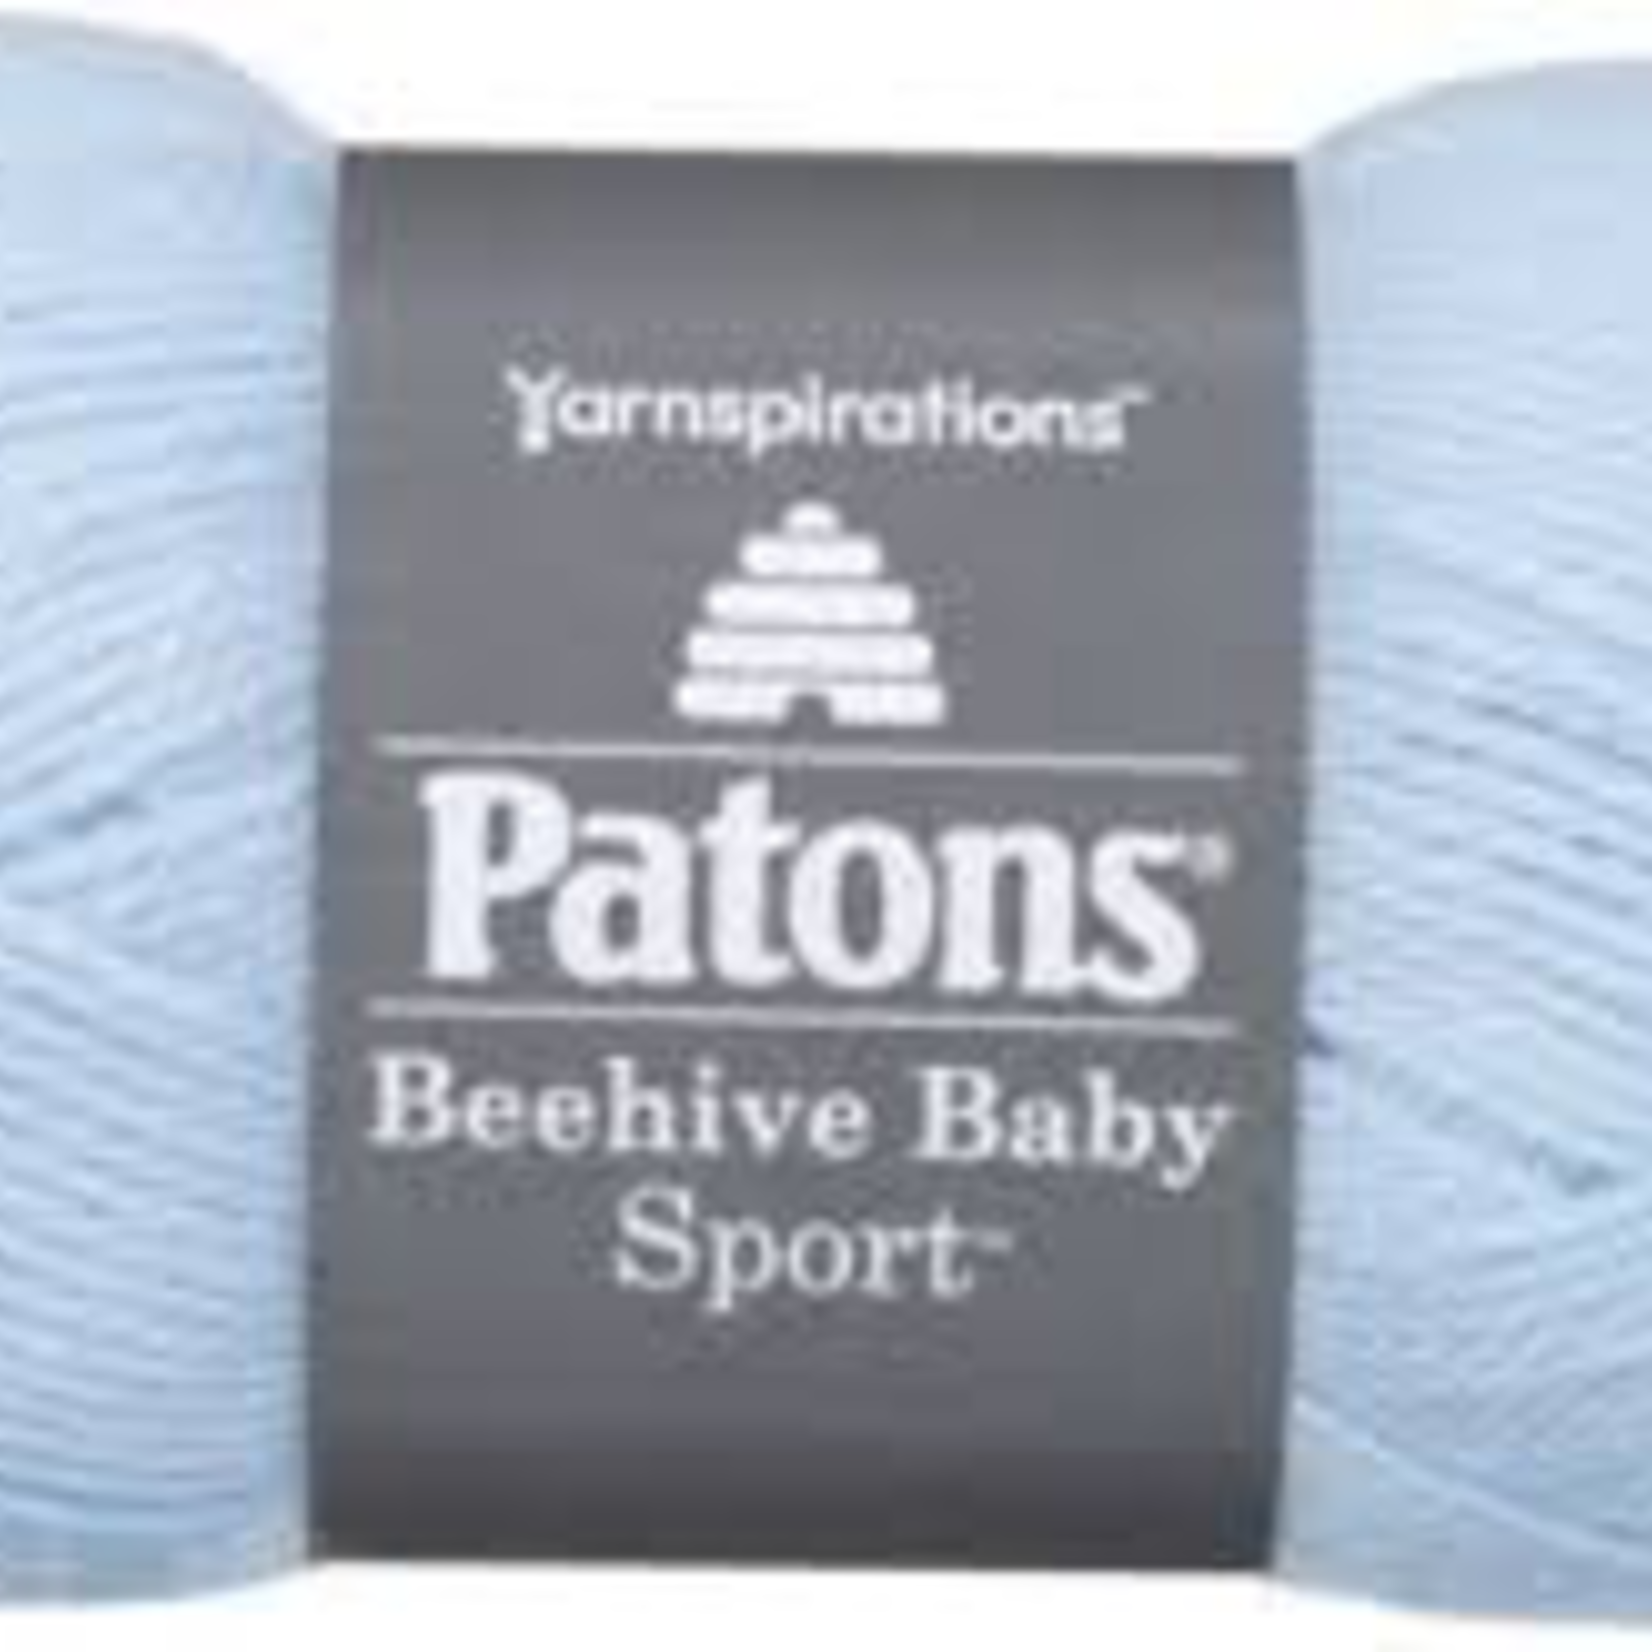 Patons Beehive Baby Sport - Bonnet Blue